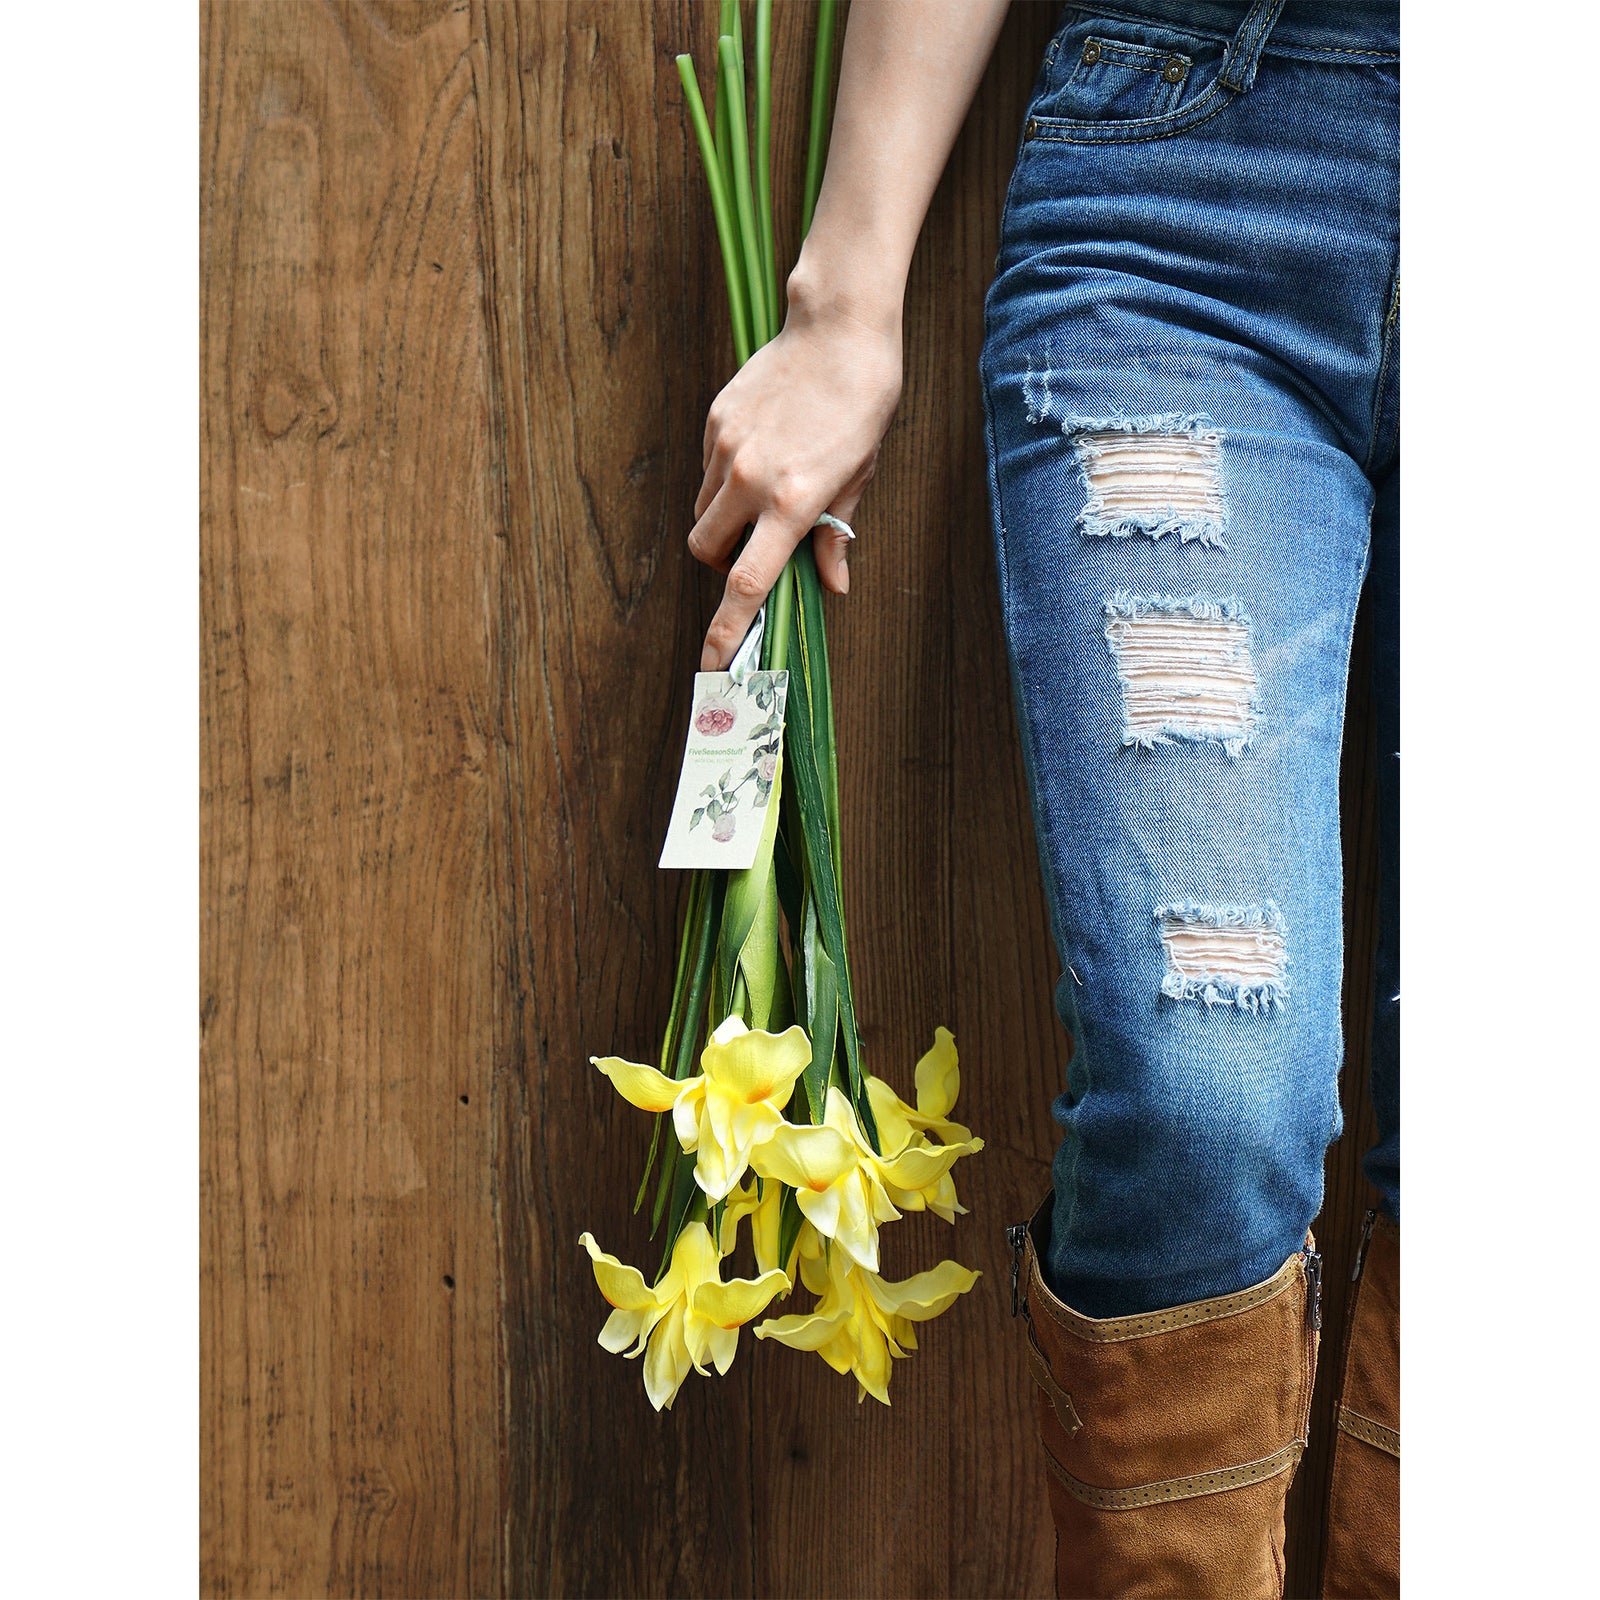 6 Long Stems Iris (Yellow) Real Touch Artificial Flower Bouquet